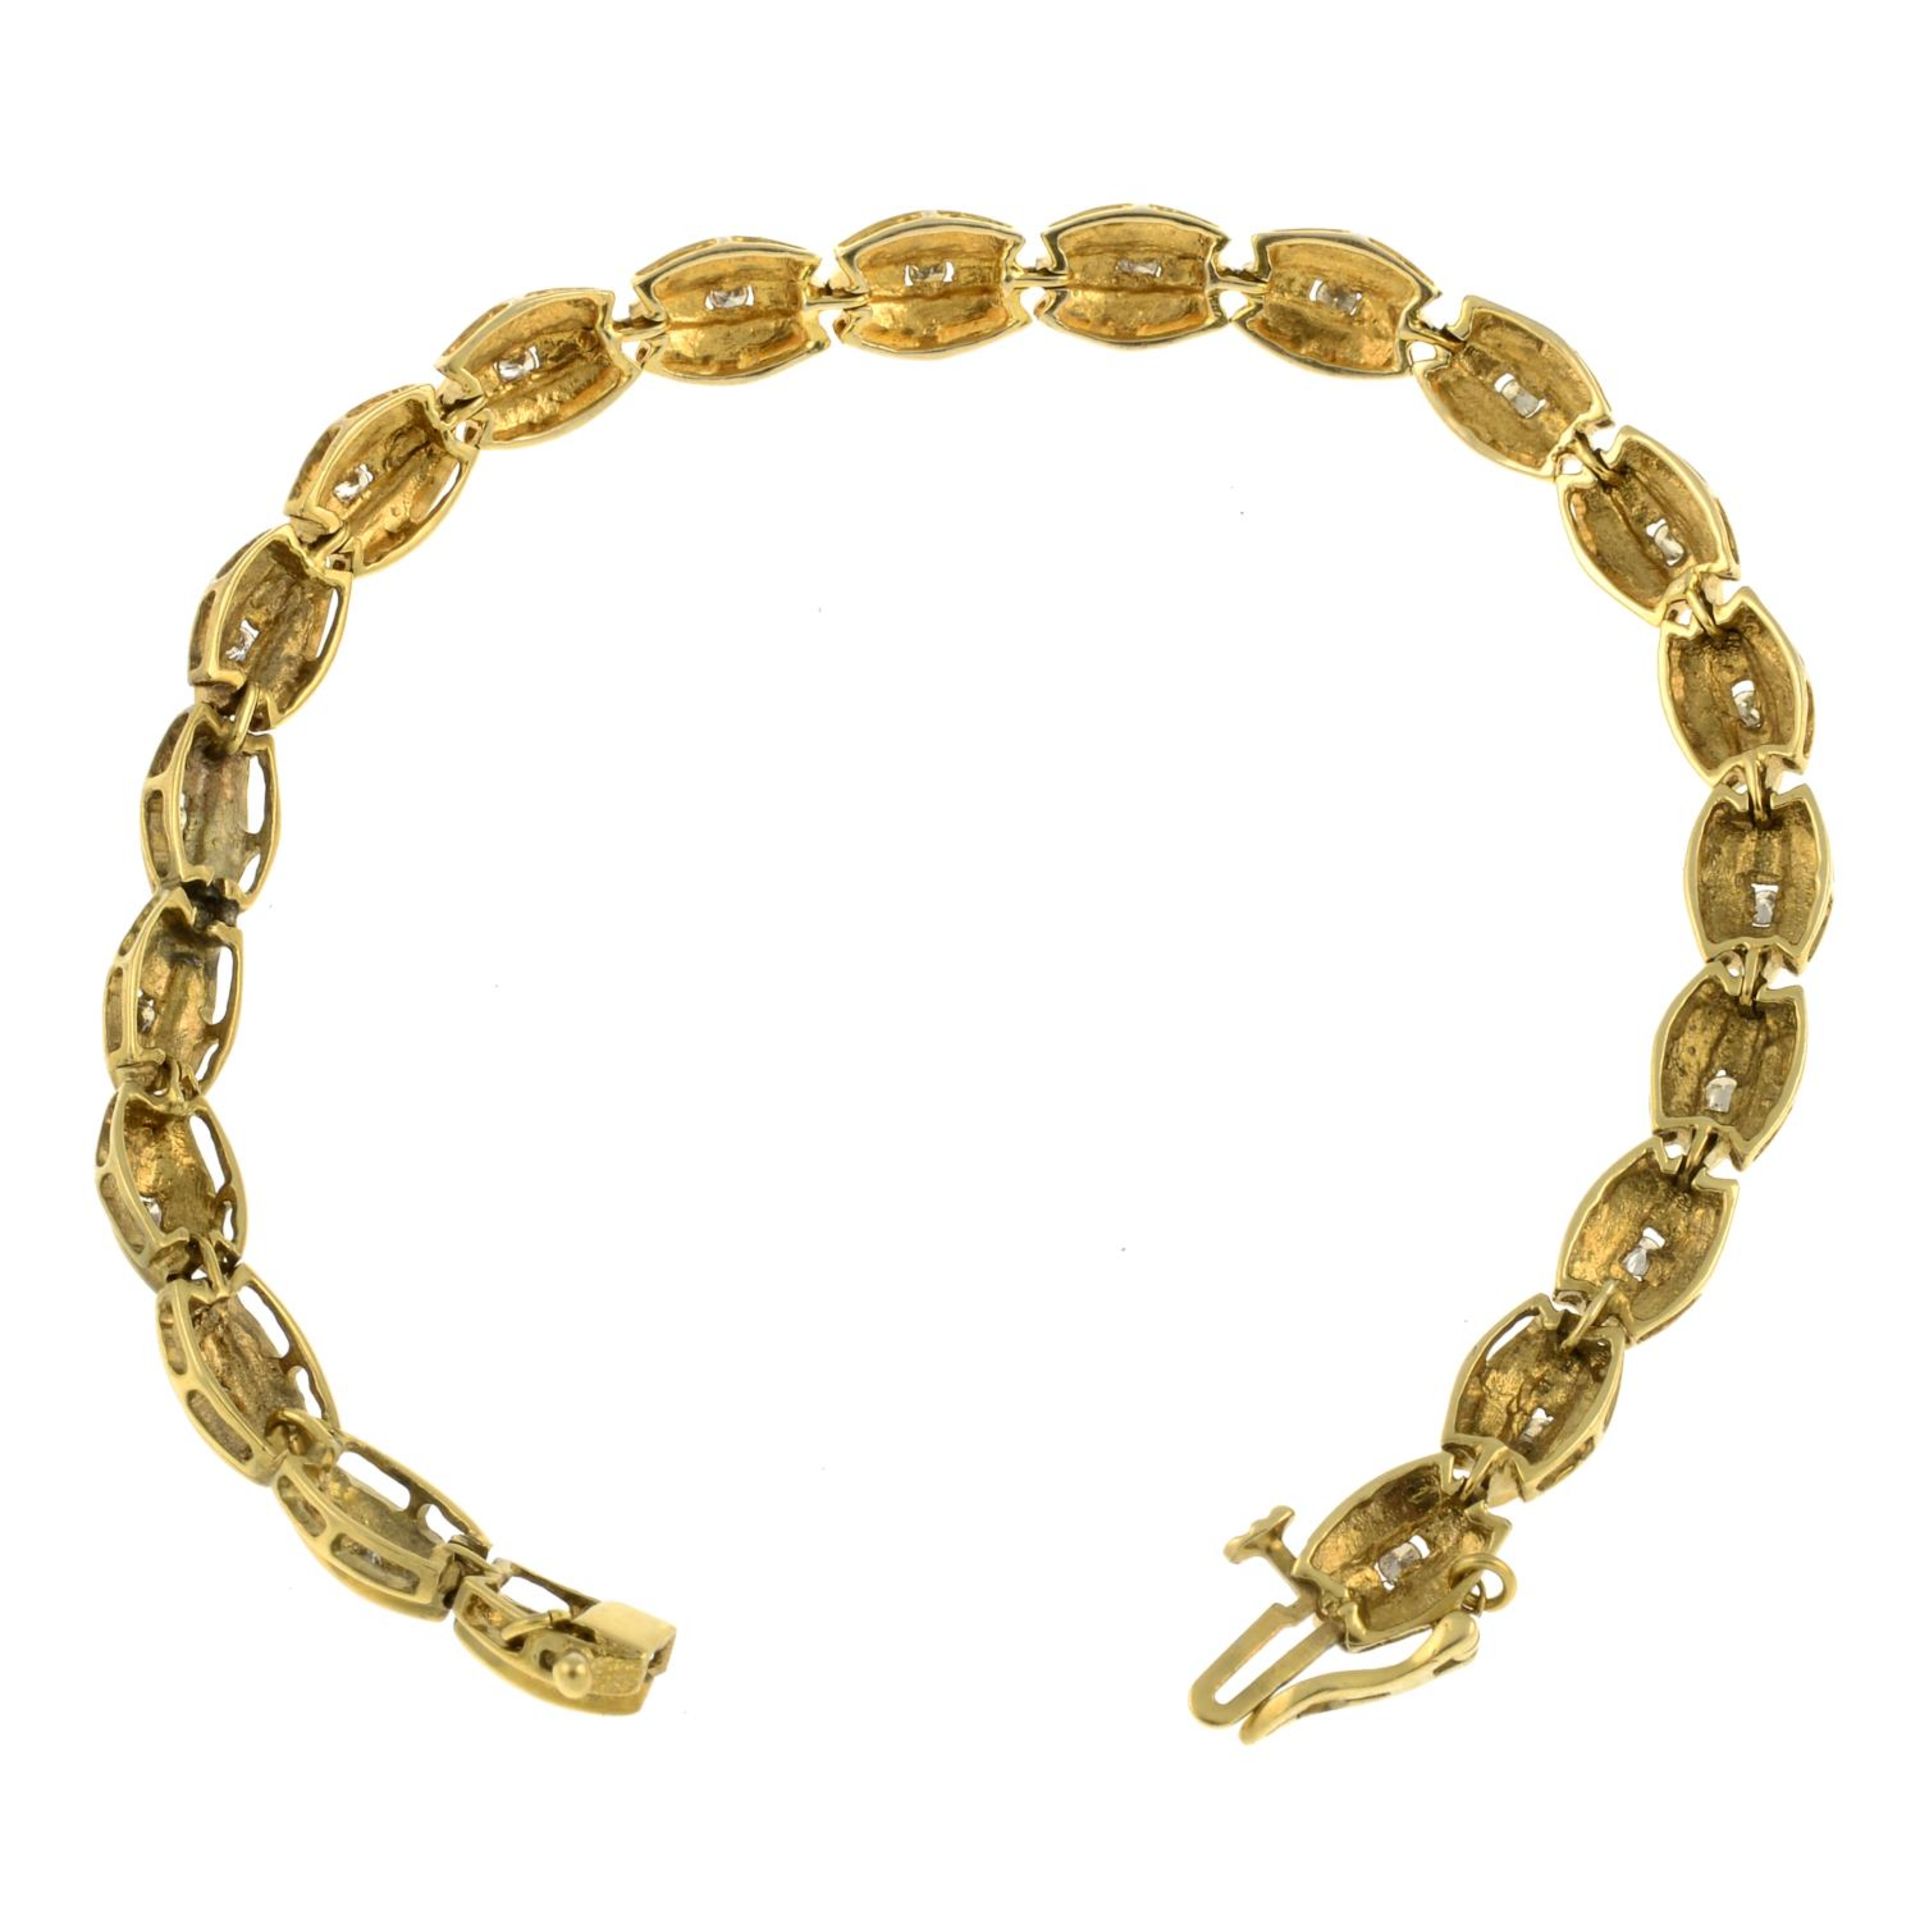 A 9ct gold brown diamond bracelet.Hallmarks for Birmingham.Length 19cms. - Image 3 of 3